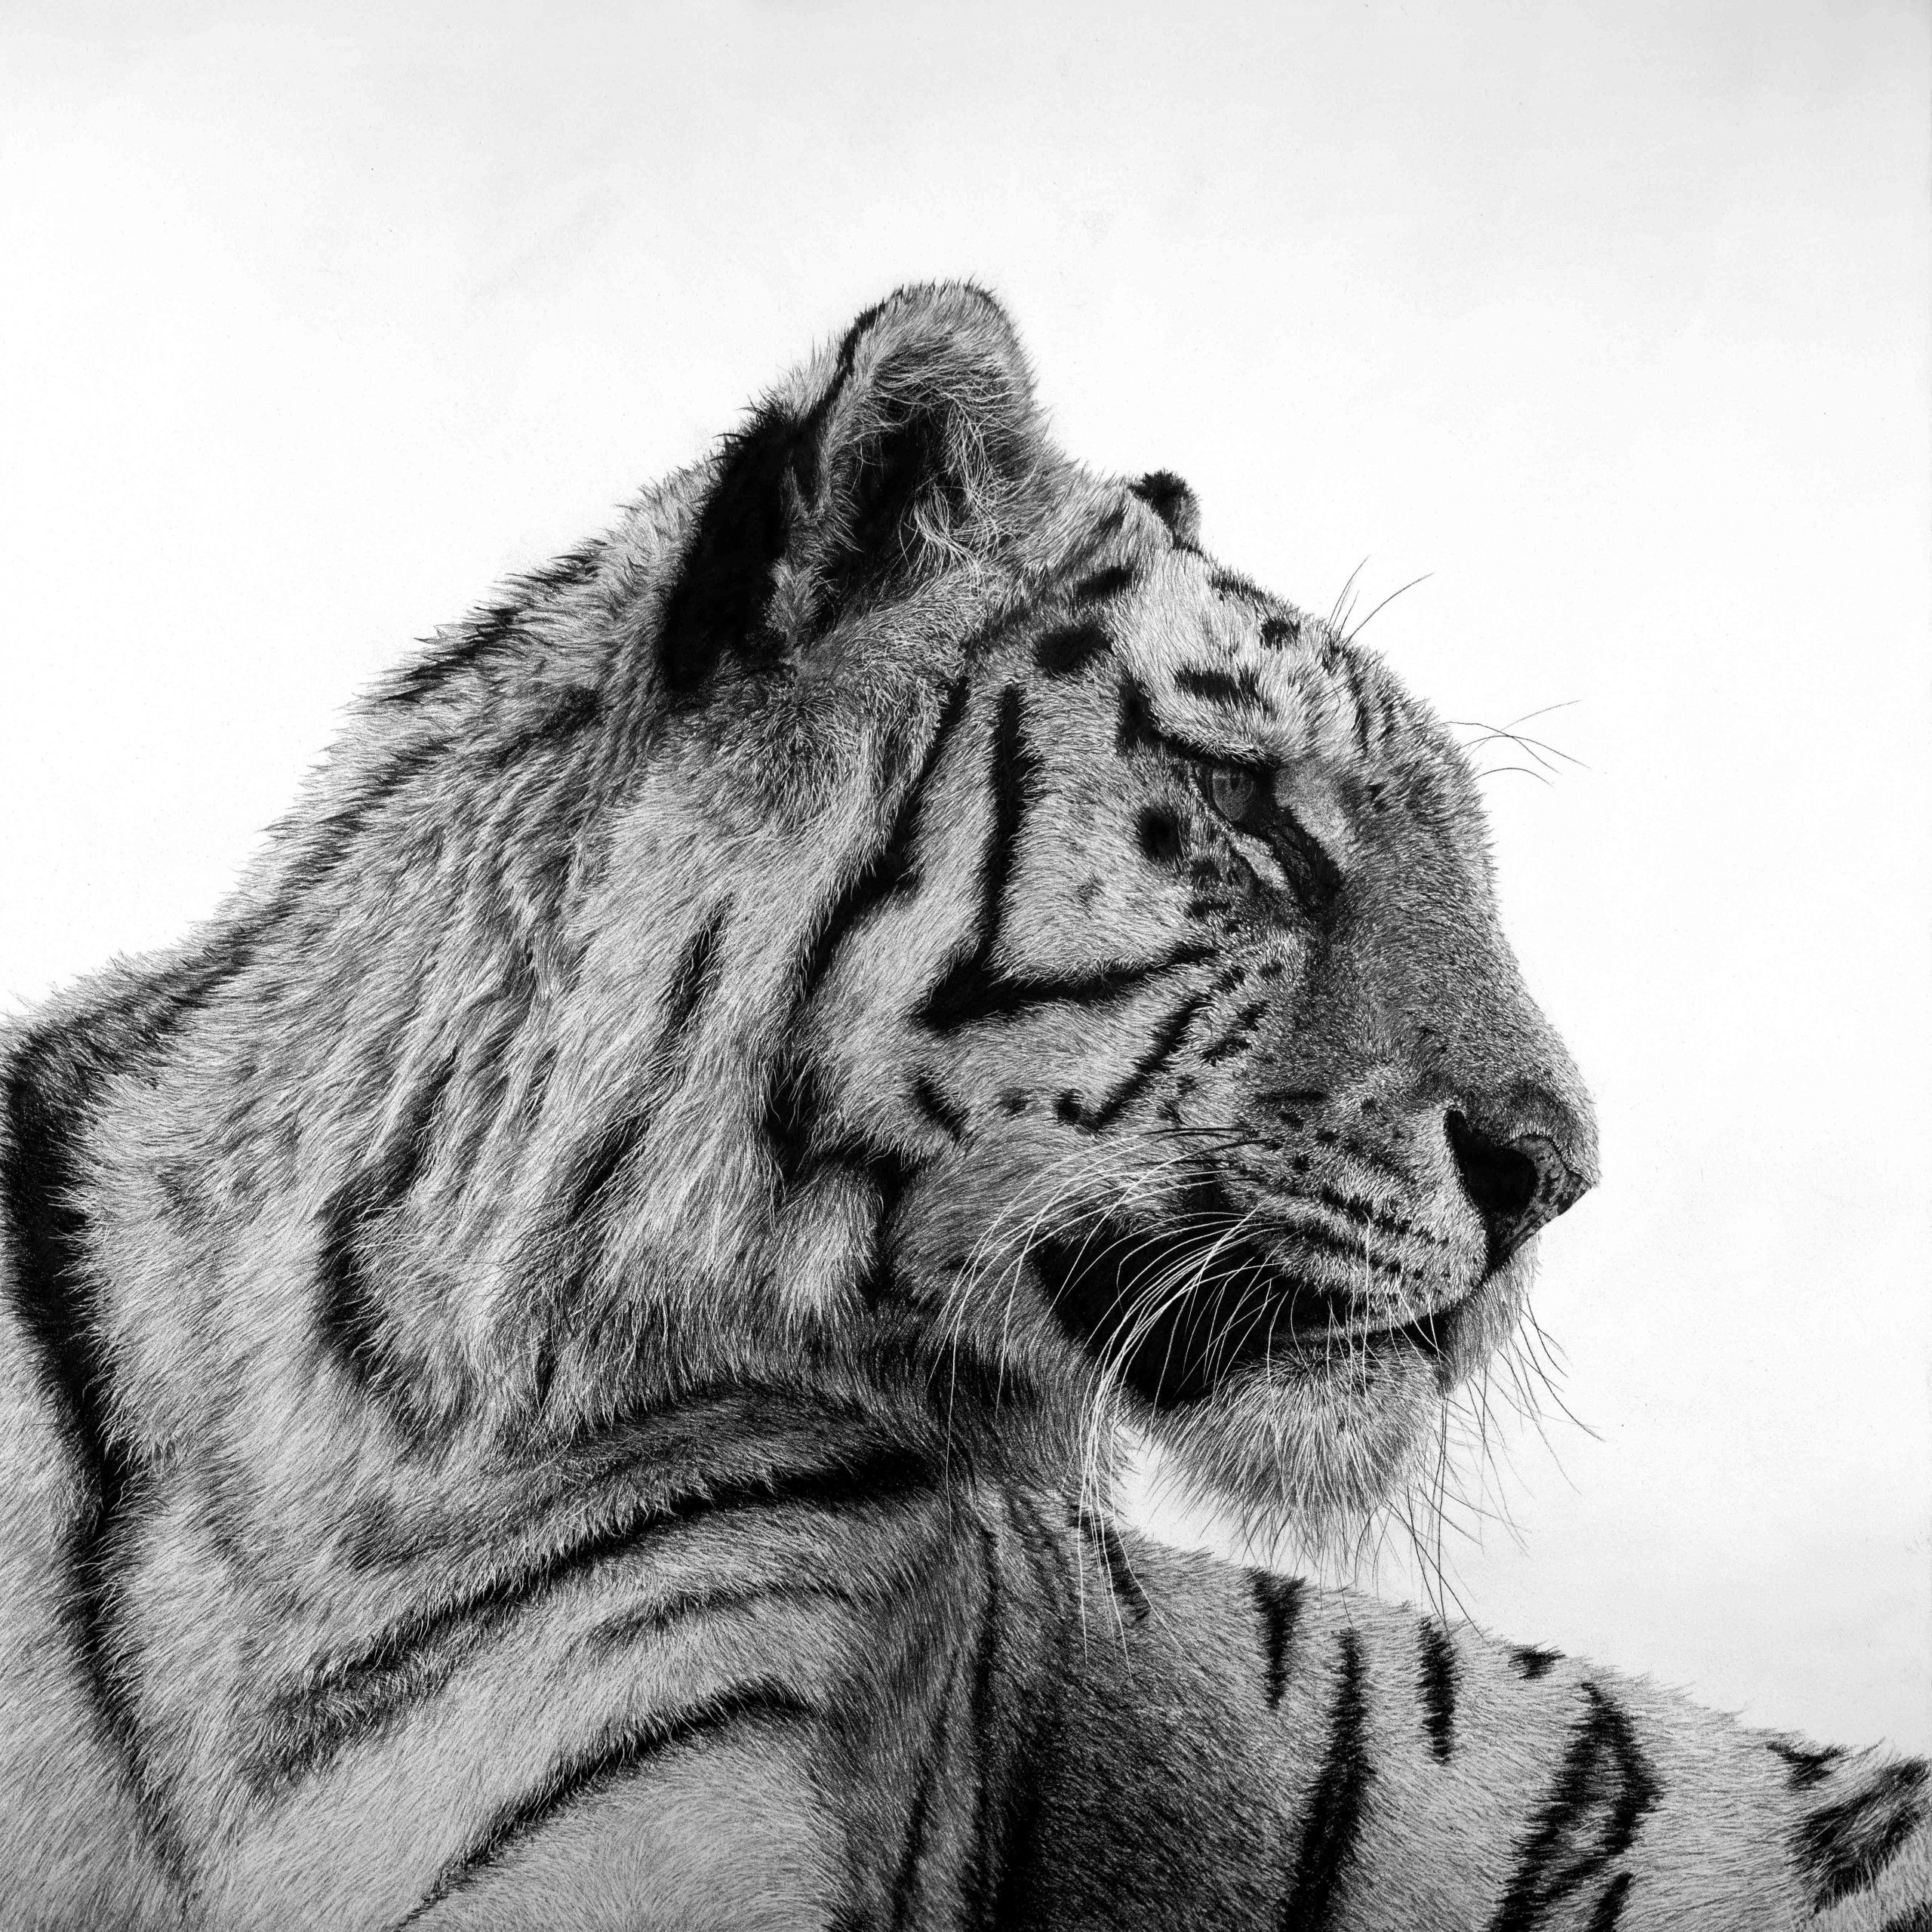 Tiger 1 by David Hunt